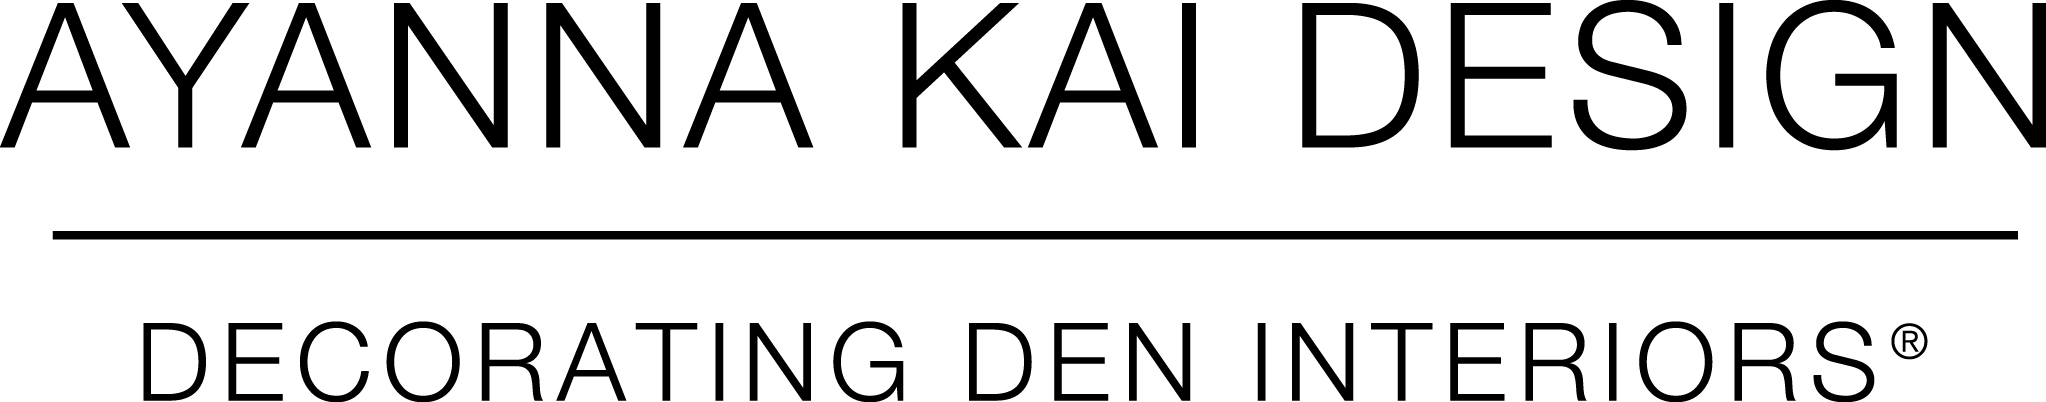 Decorating Den Interiors logo white